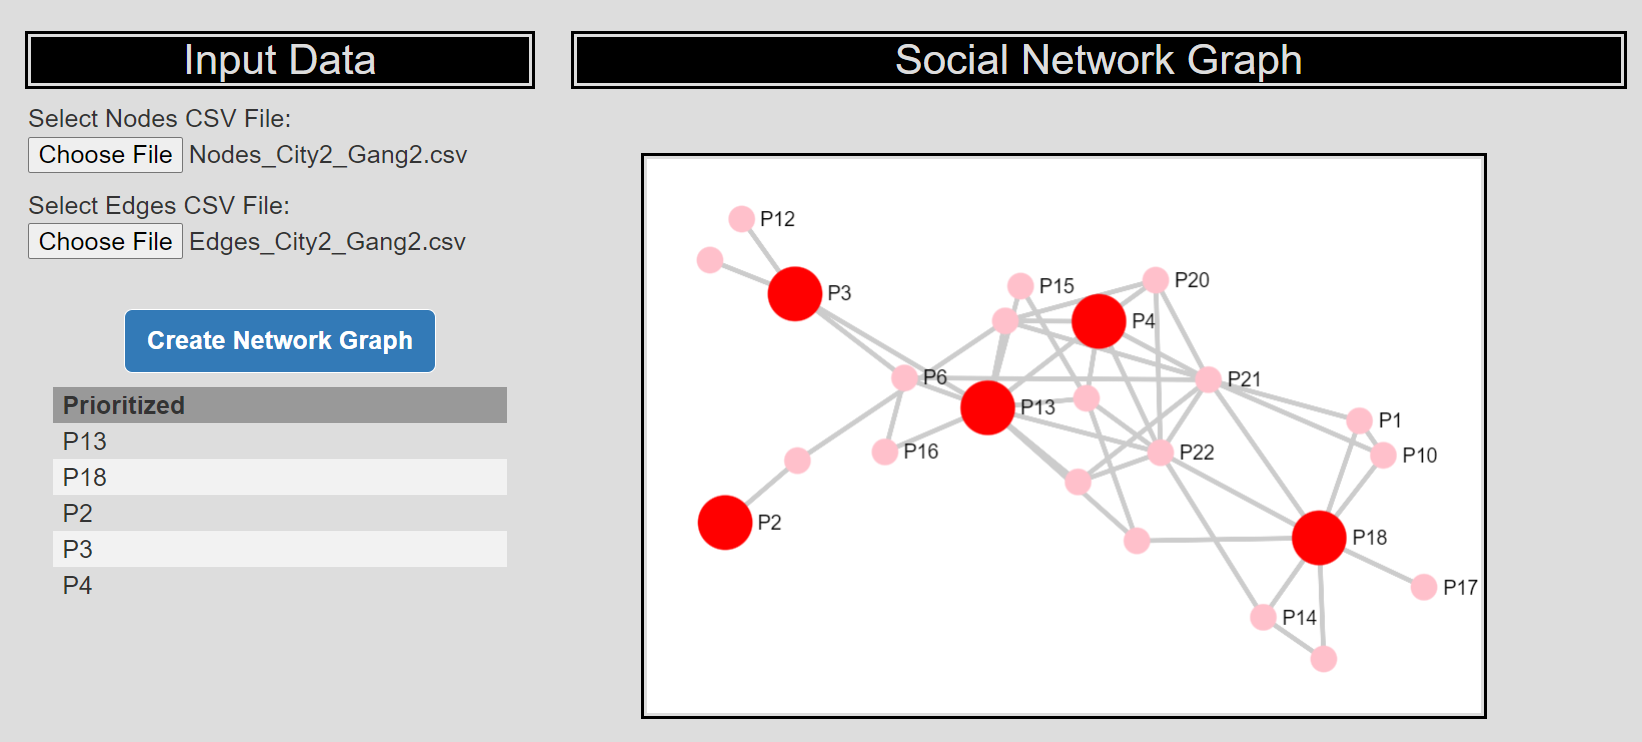 Social Network graph tool